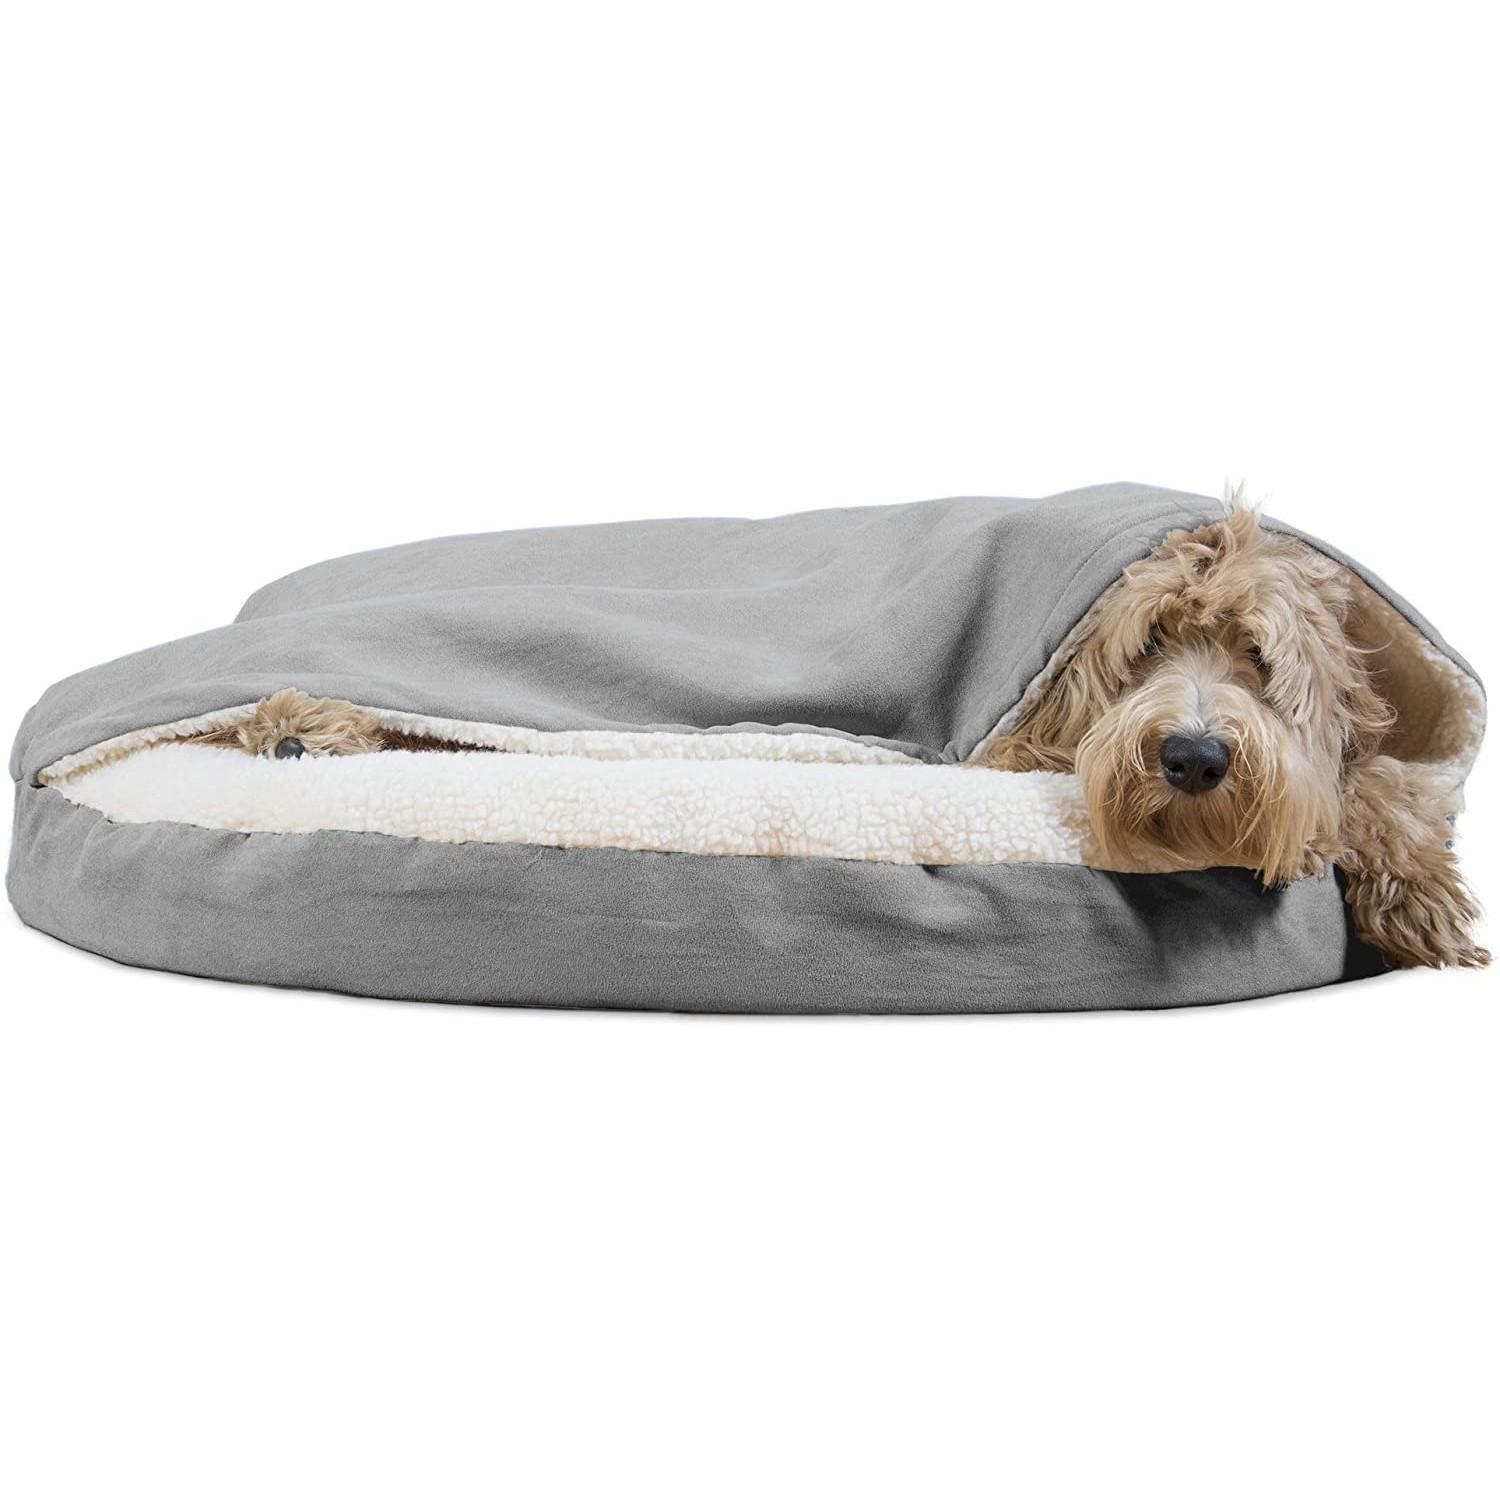 Furhaven Faux Sheepskin Snuggery Orthopedic Pet Bed - Gray